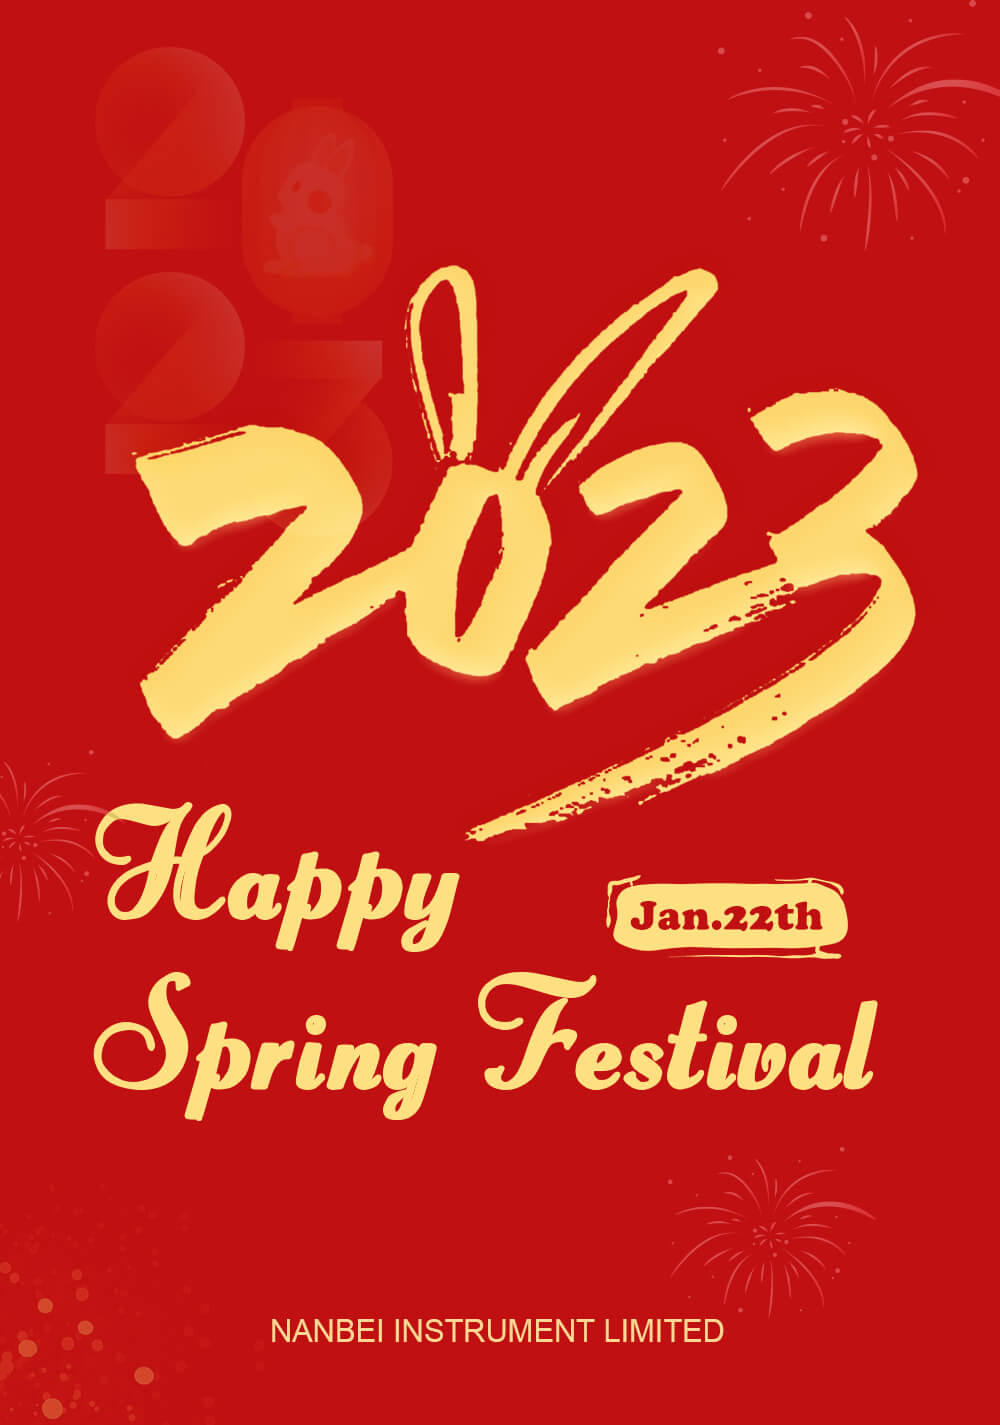 Spring Festival Holiday Notice